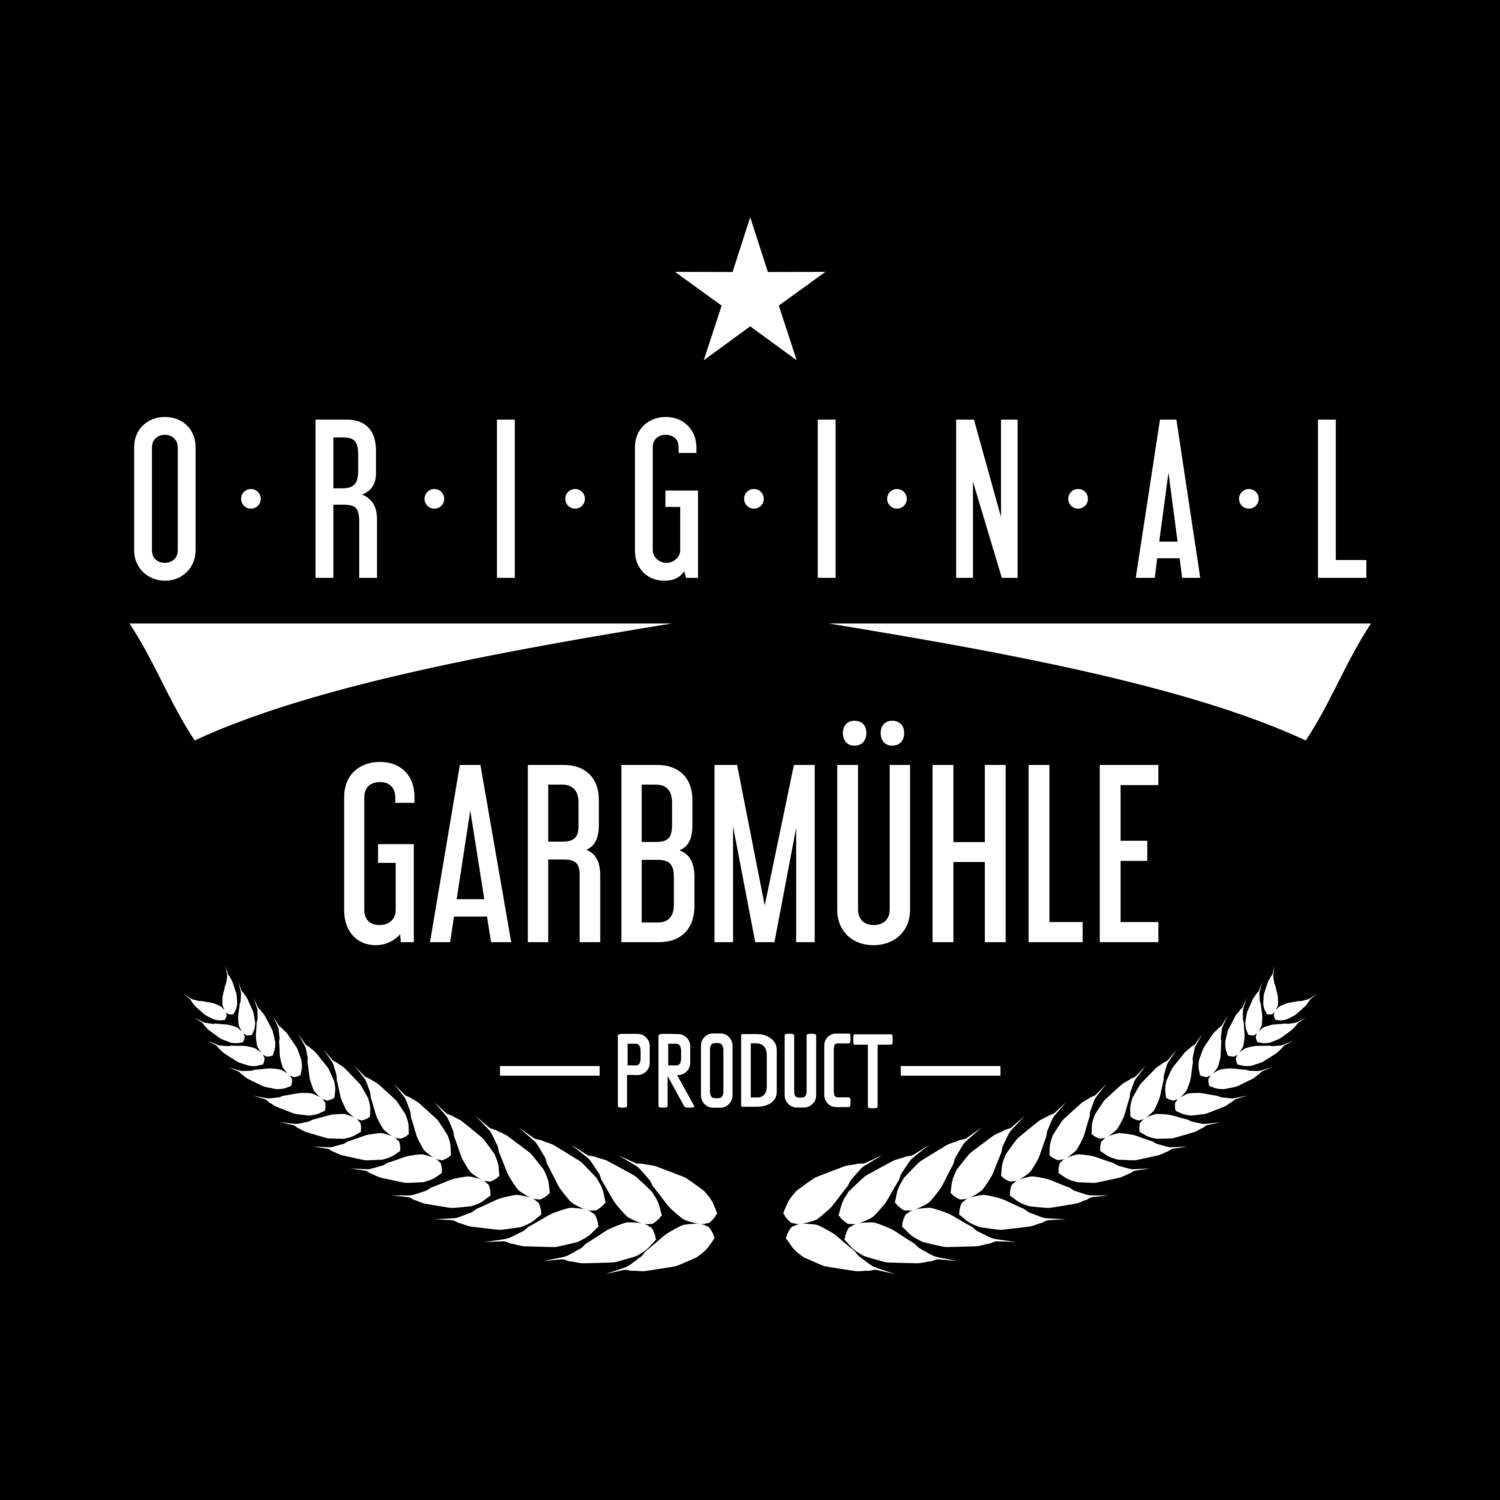 Garbmühle T-Shirt »Original Product«